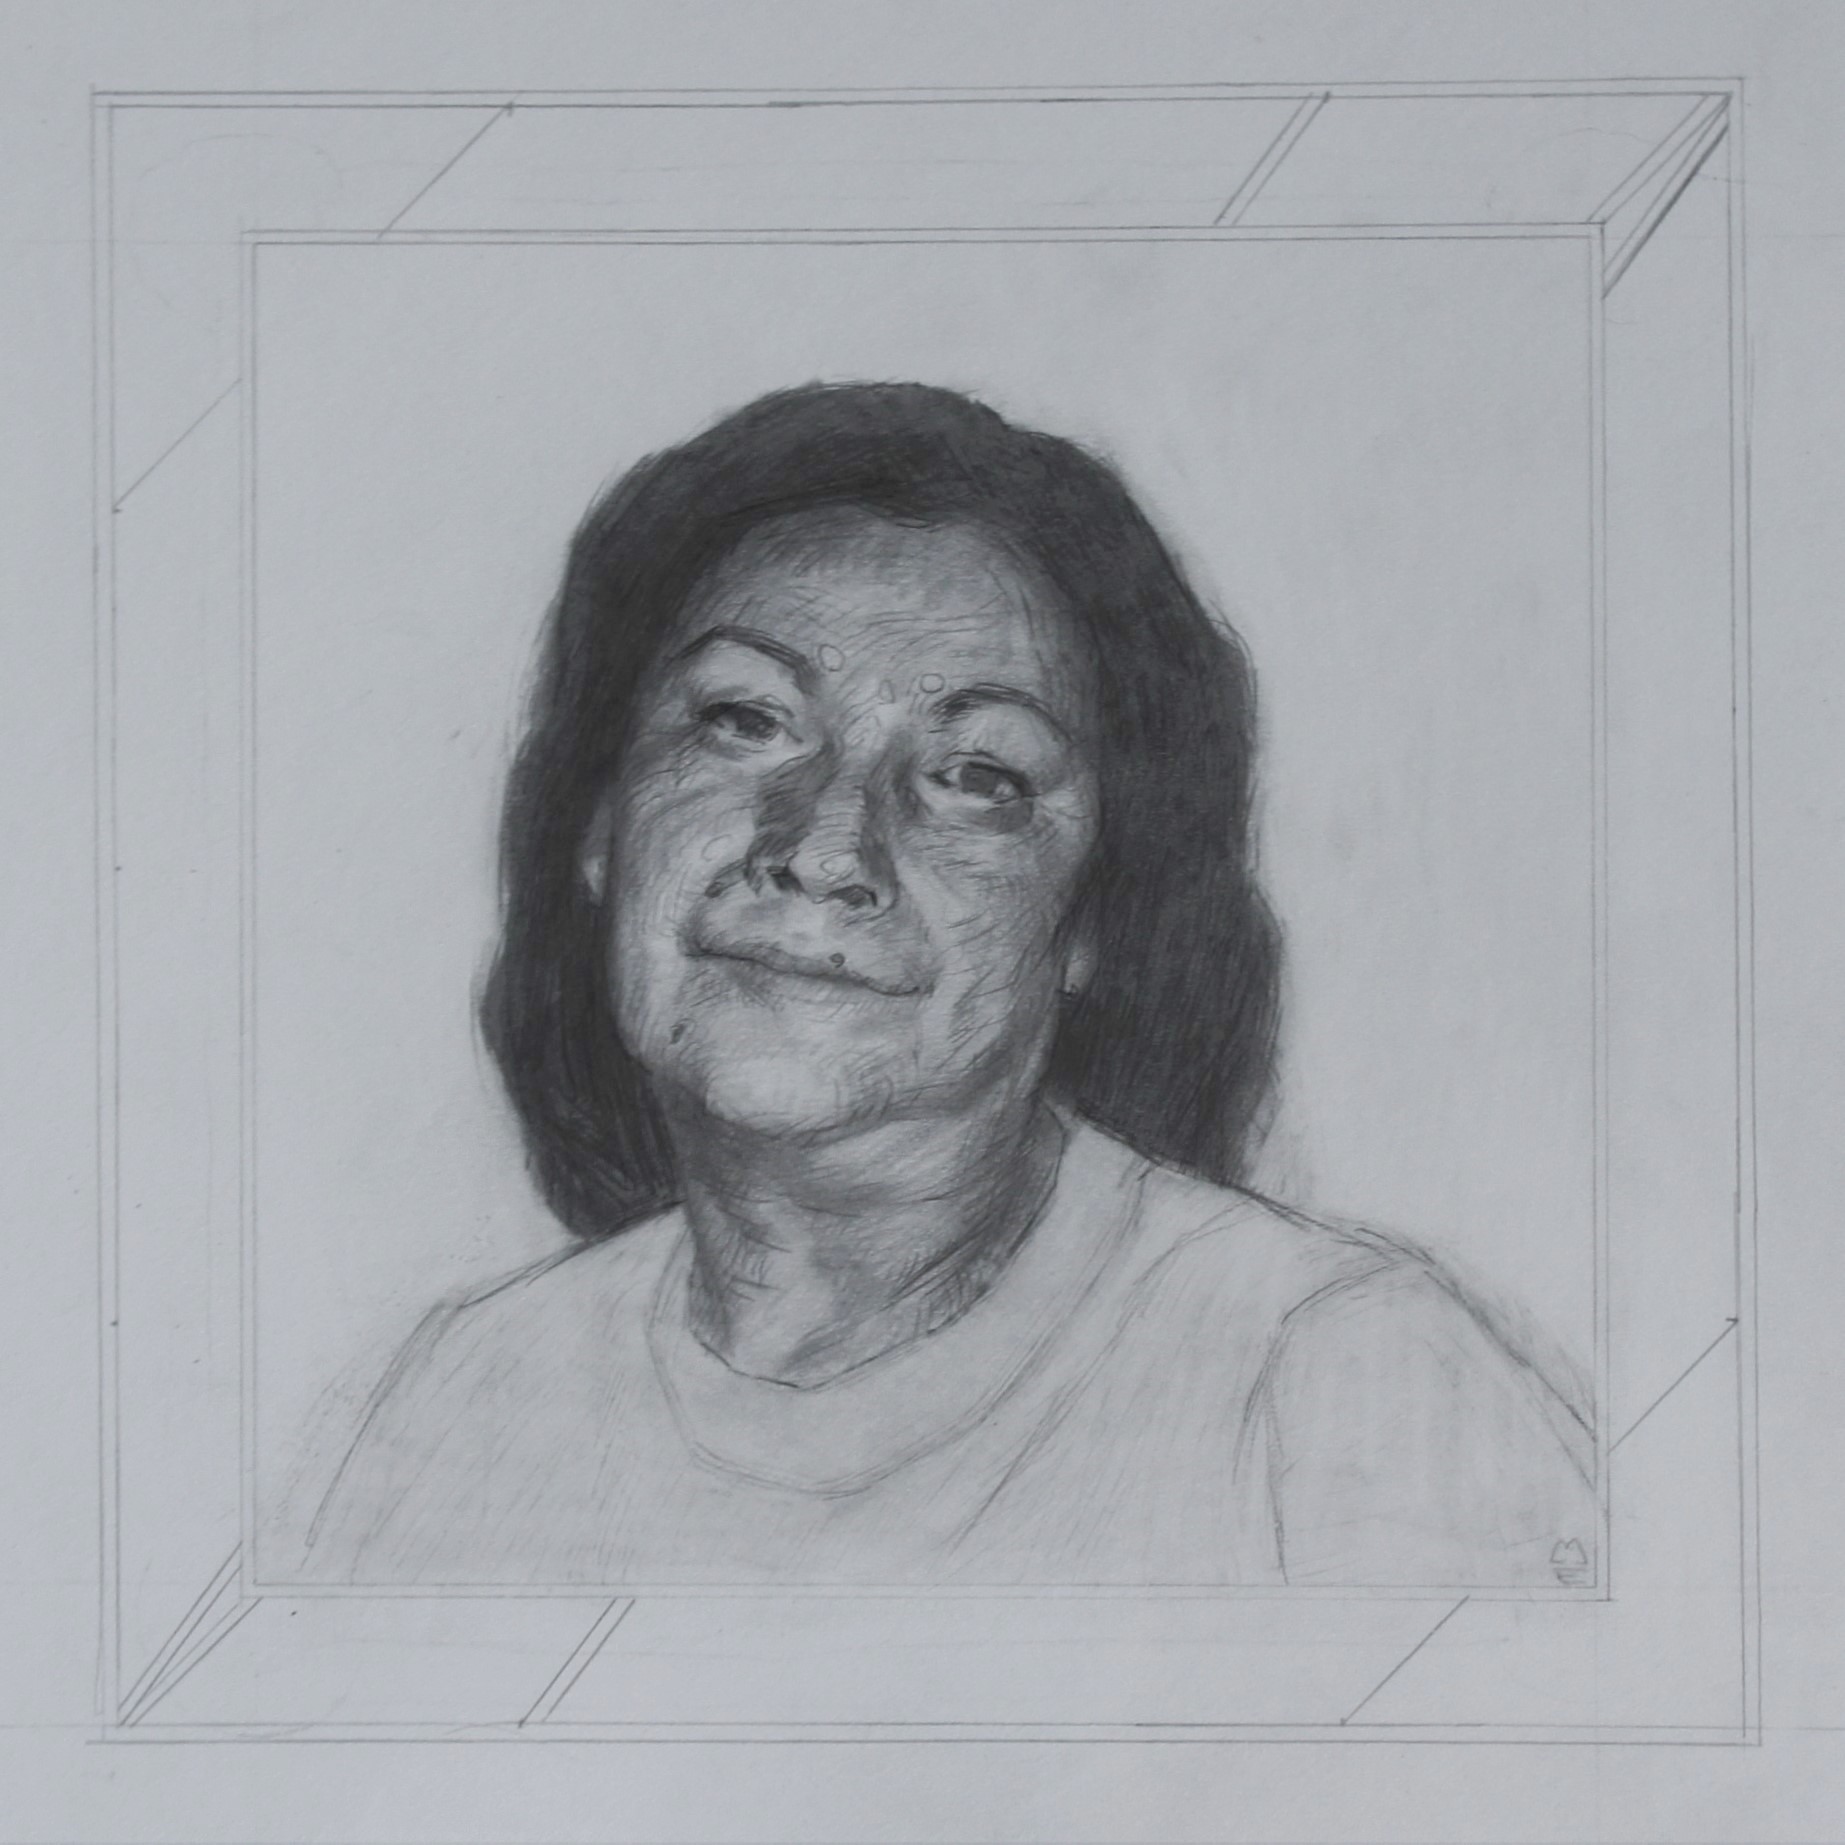 Graphite portrait drawing